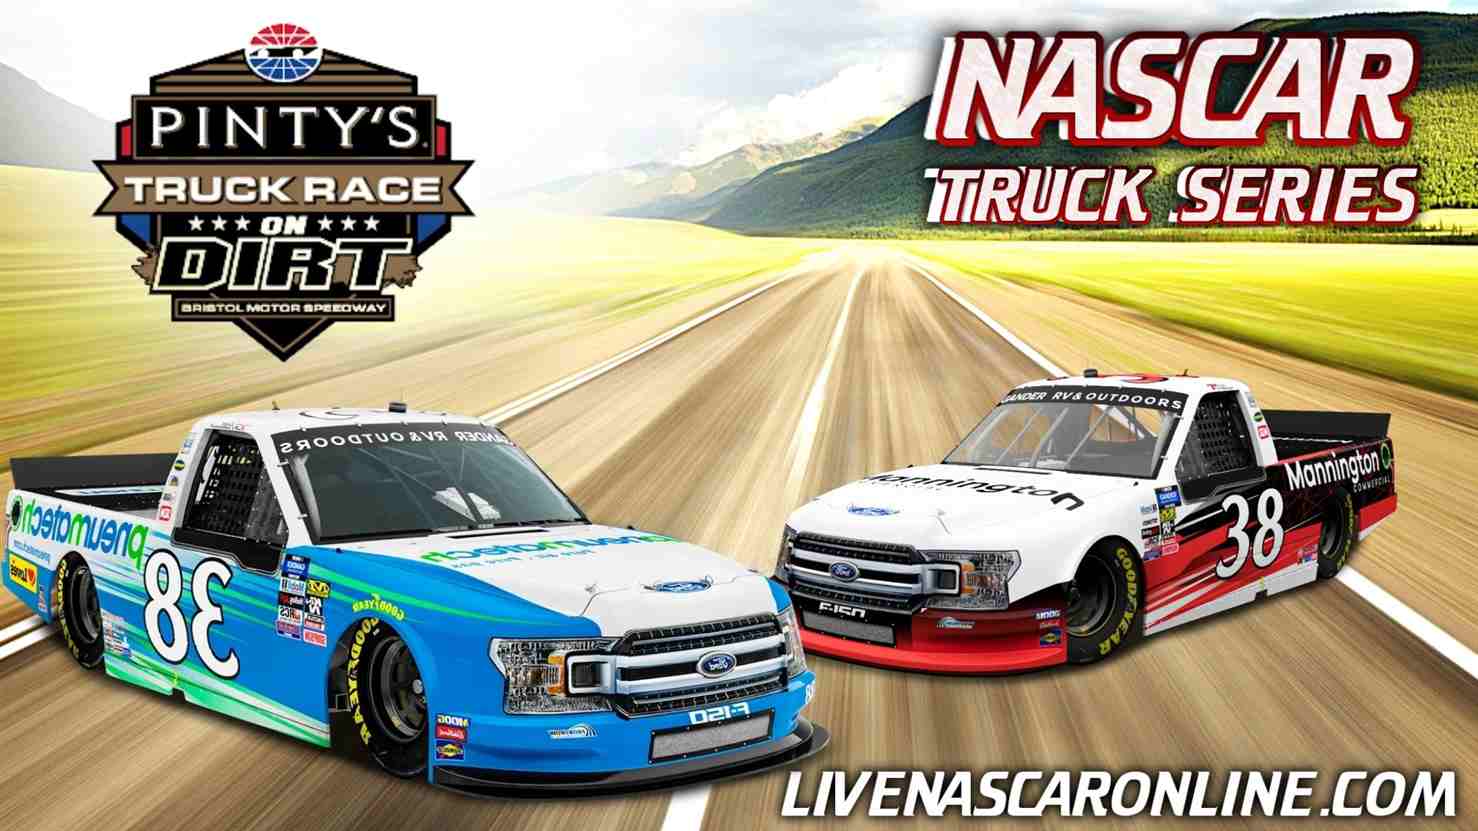 Pintys Race On Dirt Highlights 2021 Nascar Truck Series